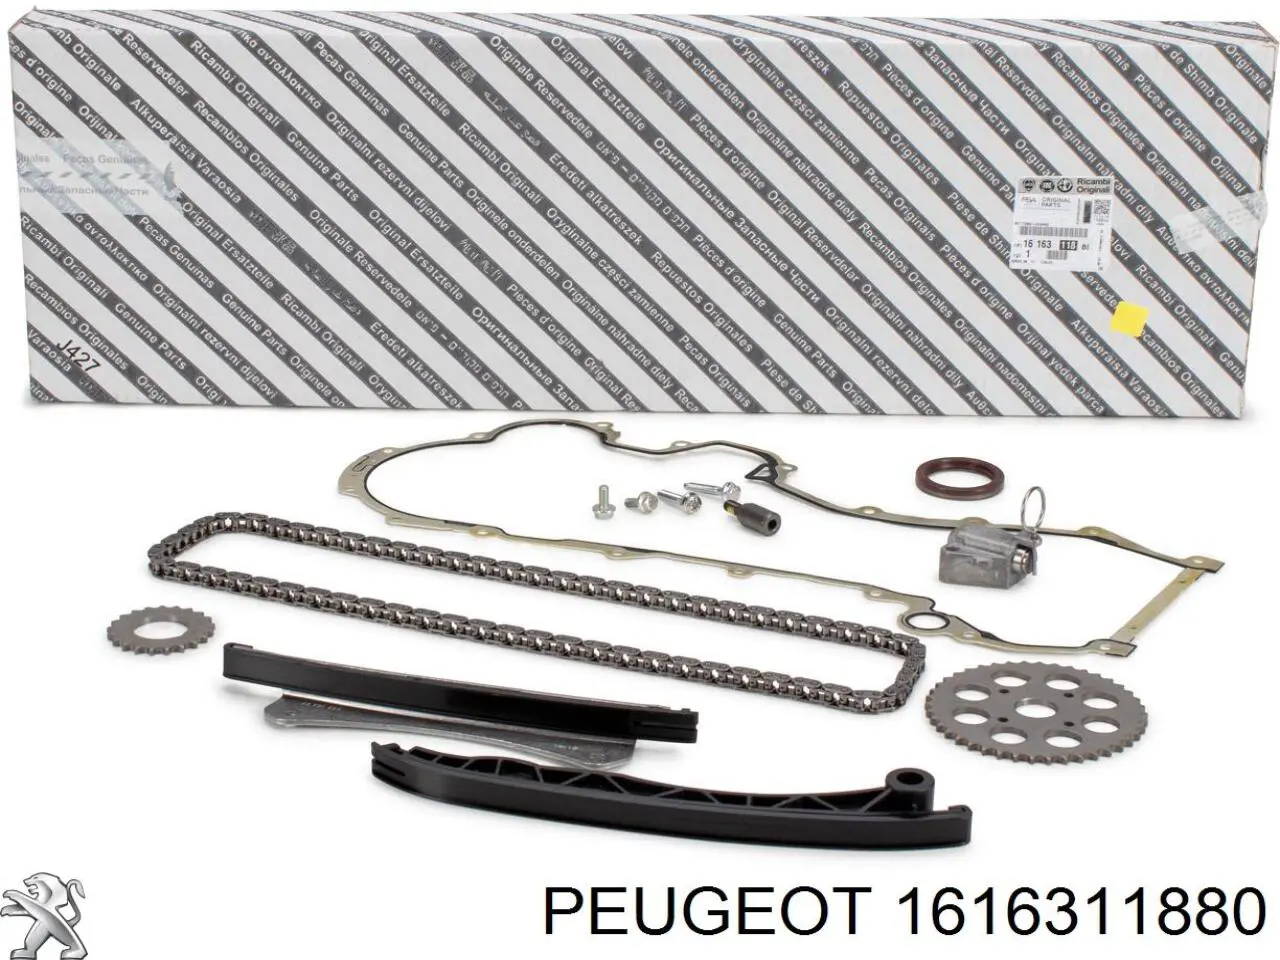 1616311880 Peugeot/Citroen комплект цепи грм